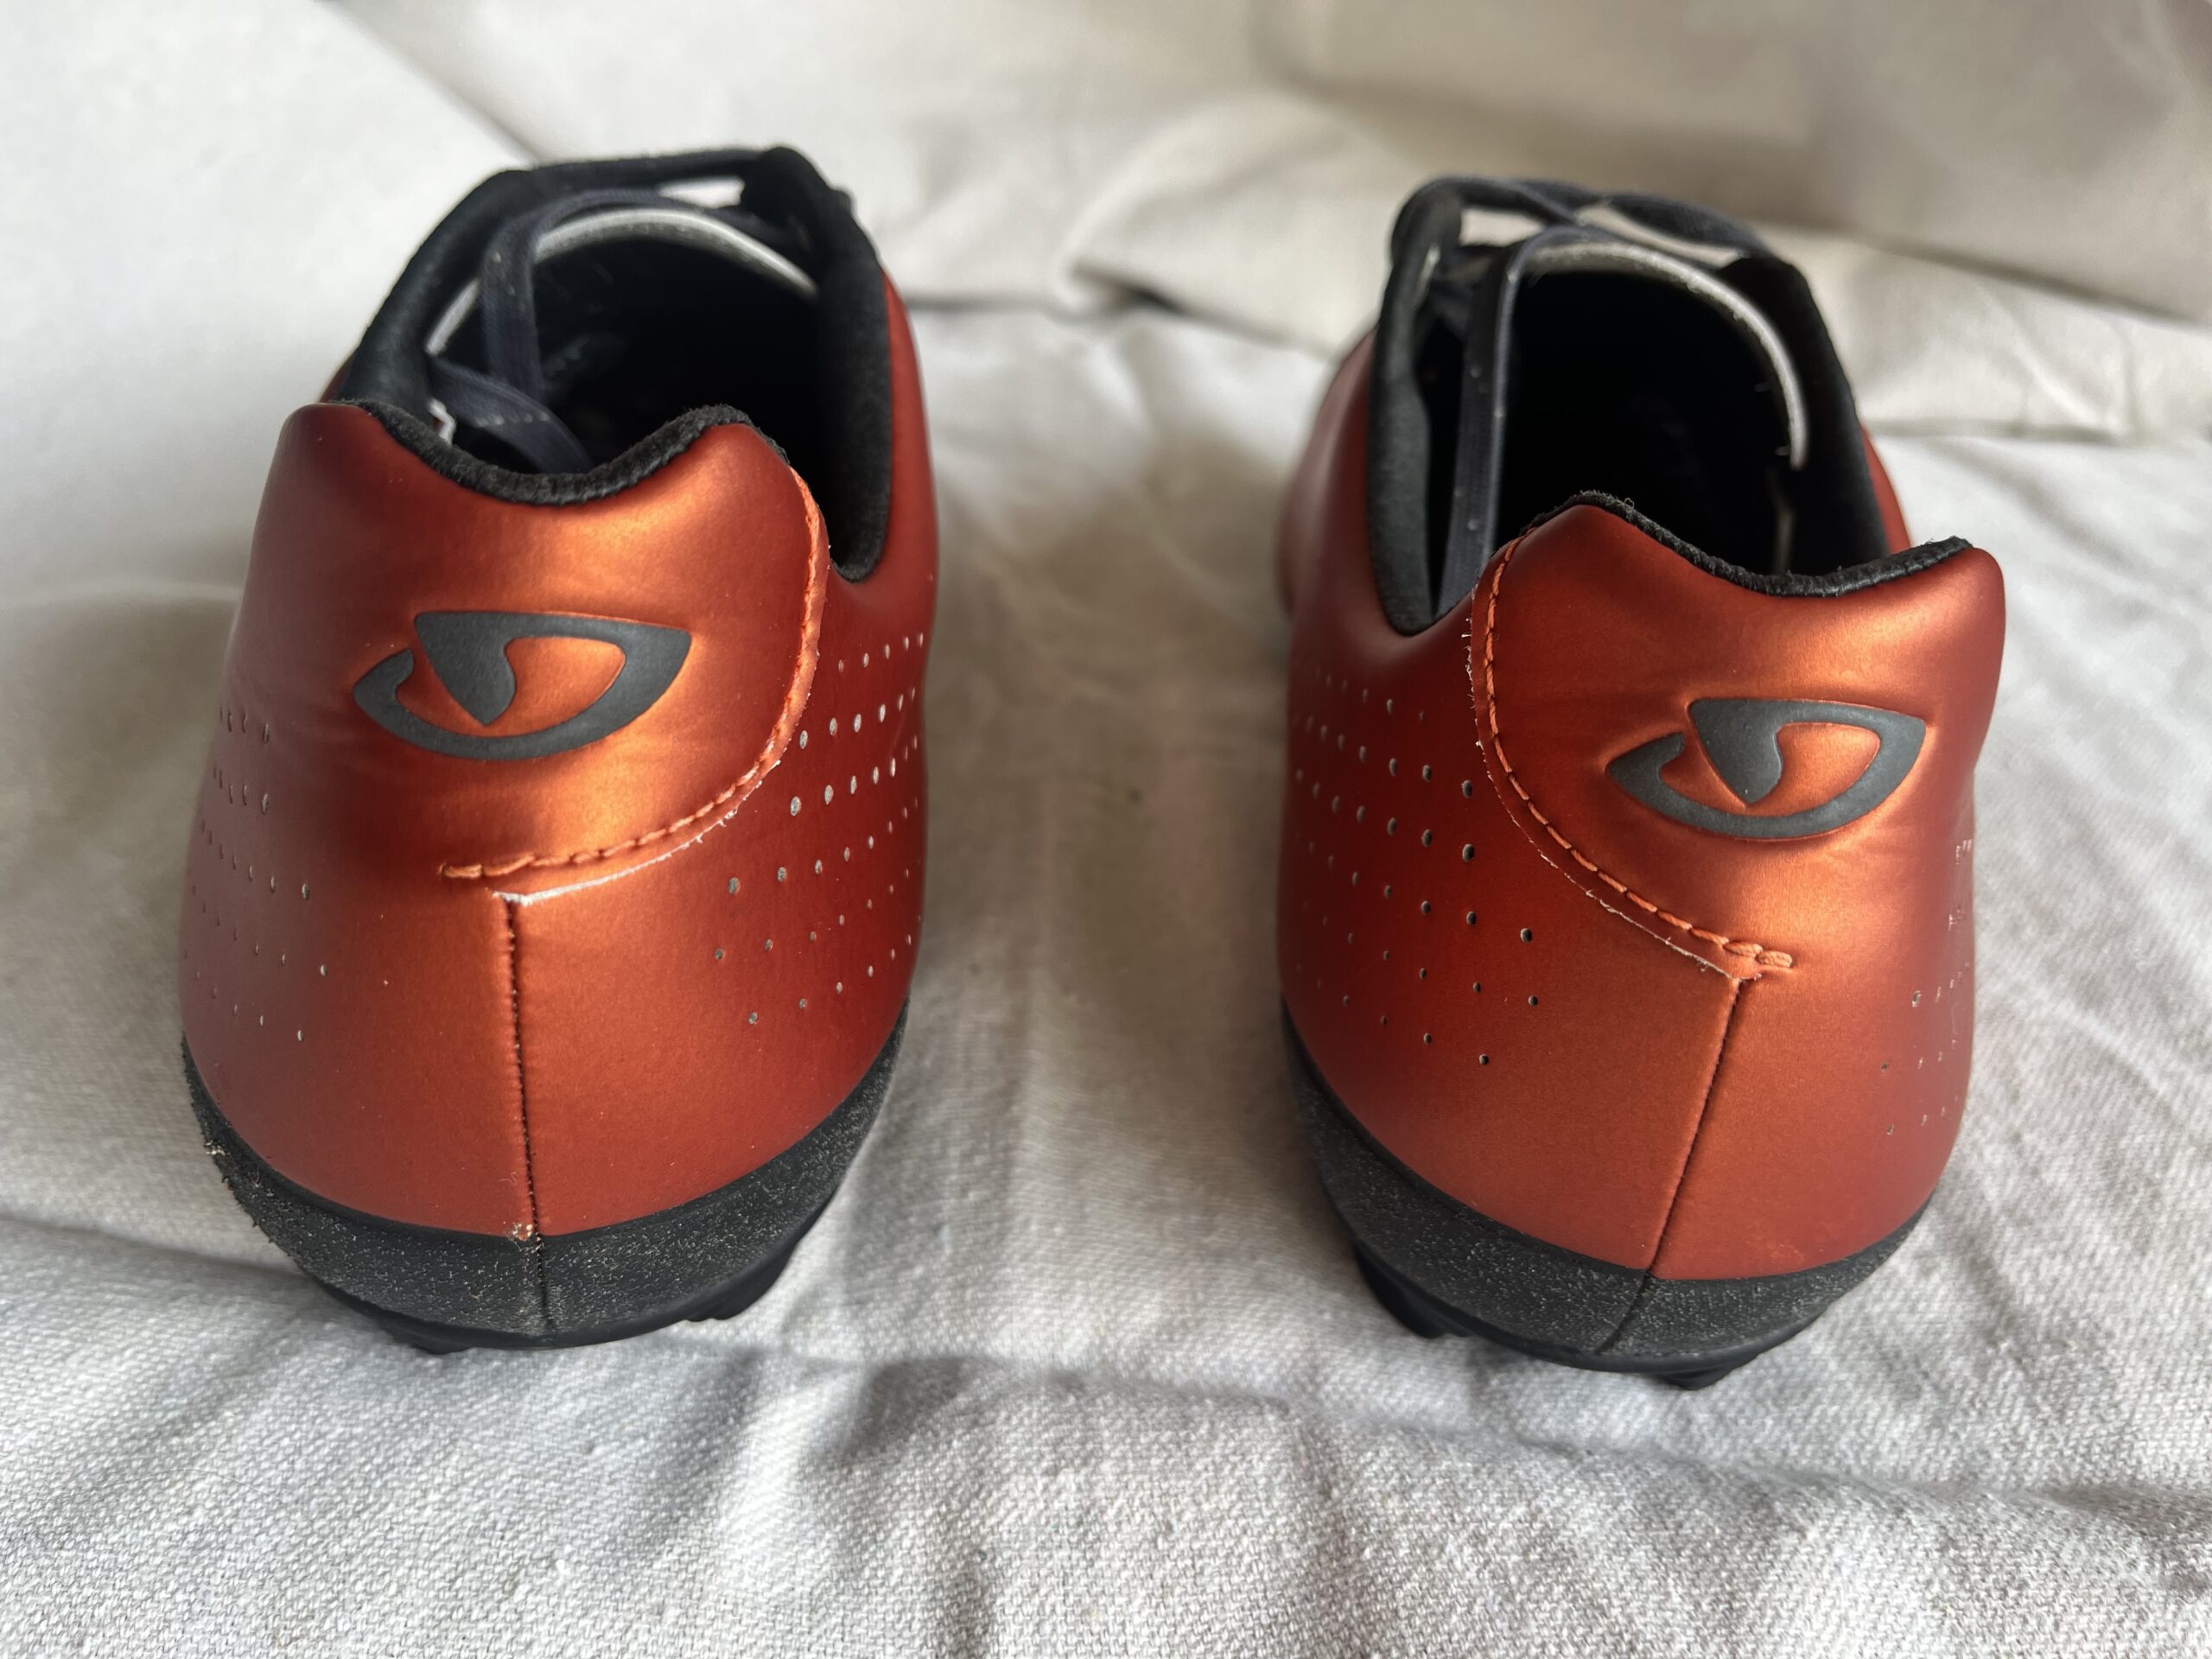 SOLD - Giro Empire VR90 Mountain Shoes, Size 44.5